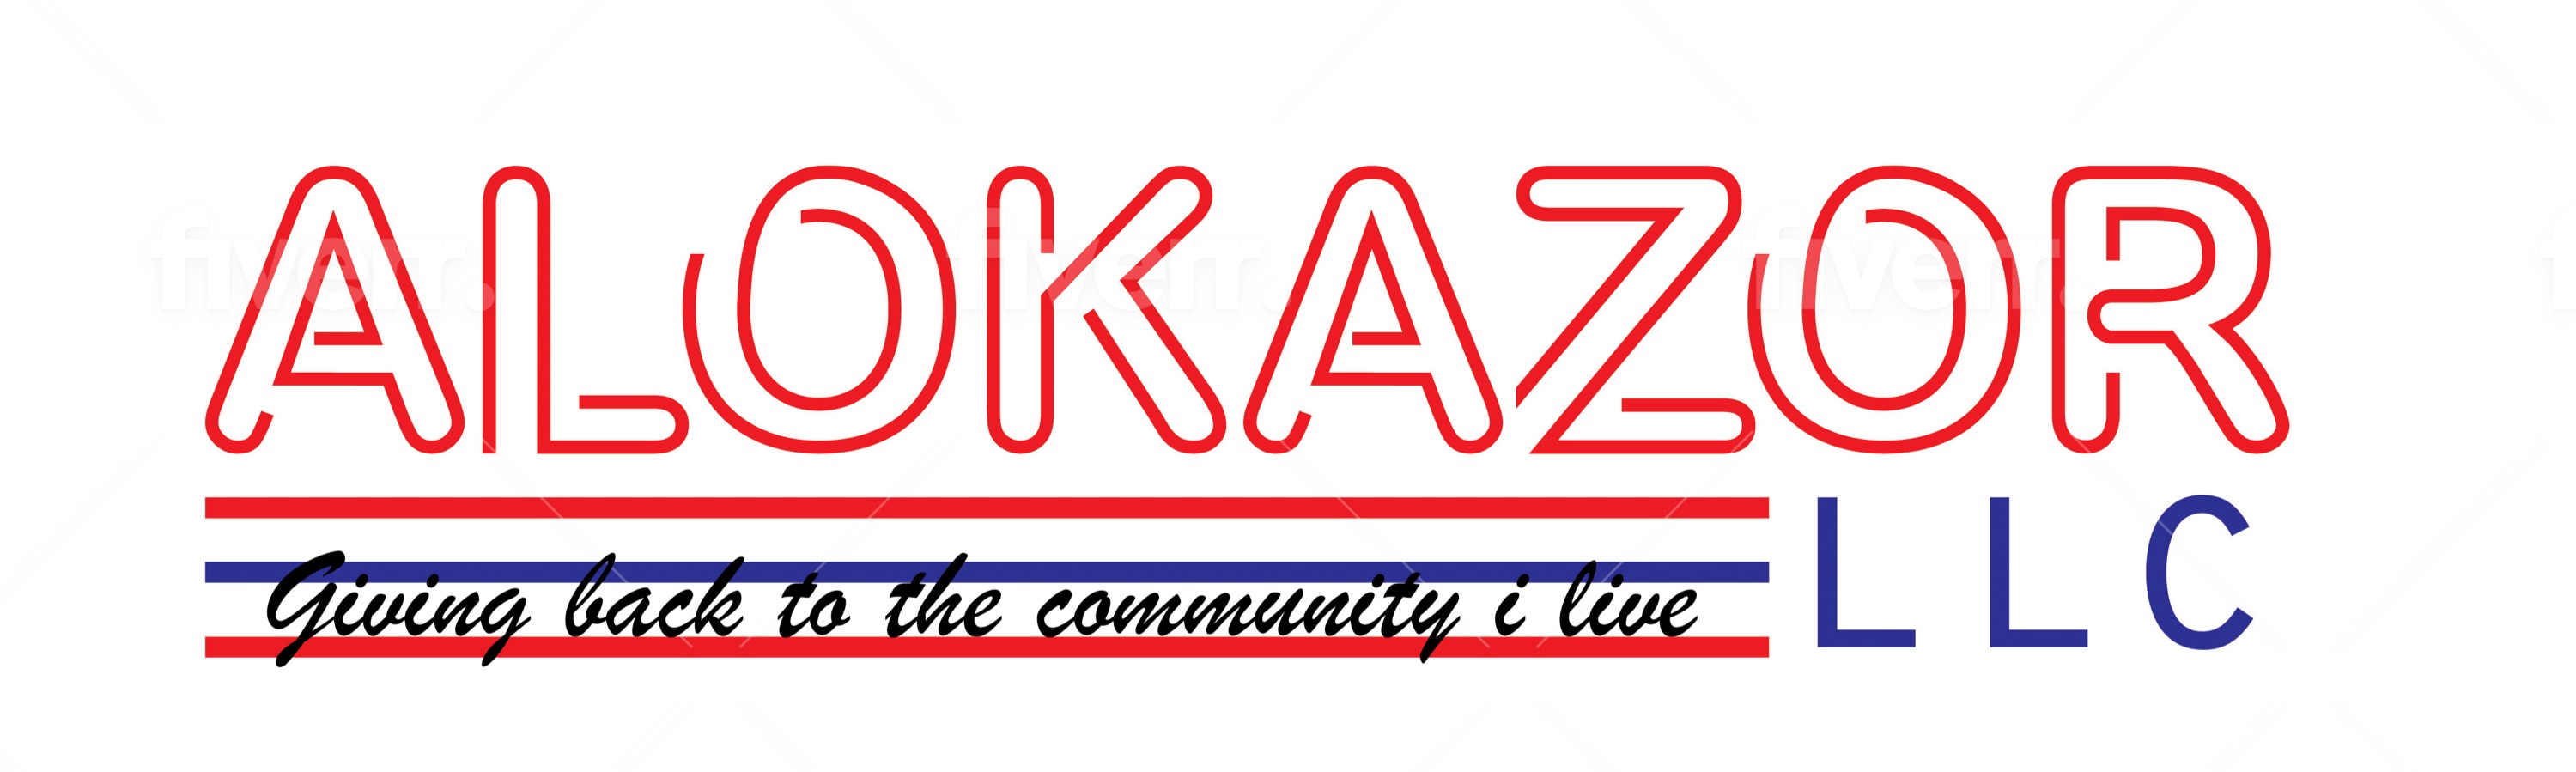 Alokazor, LLC Logo